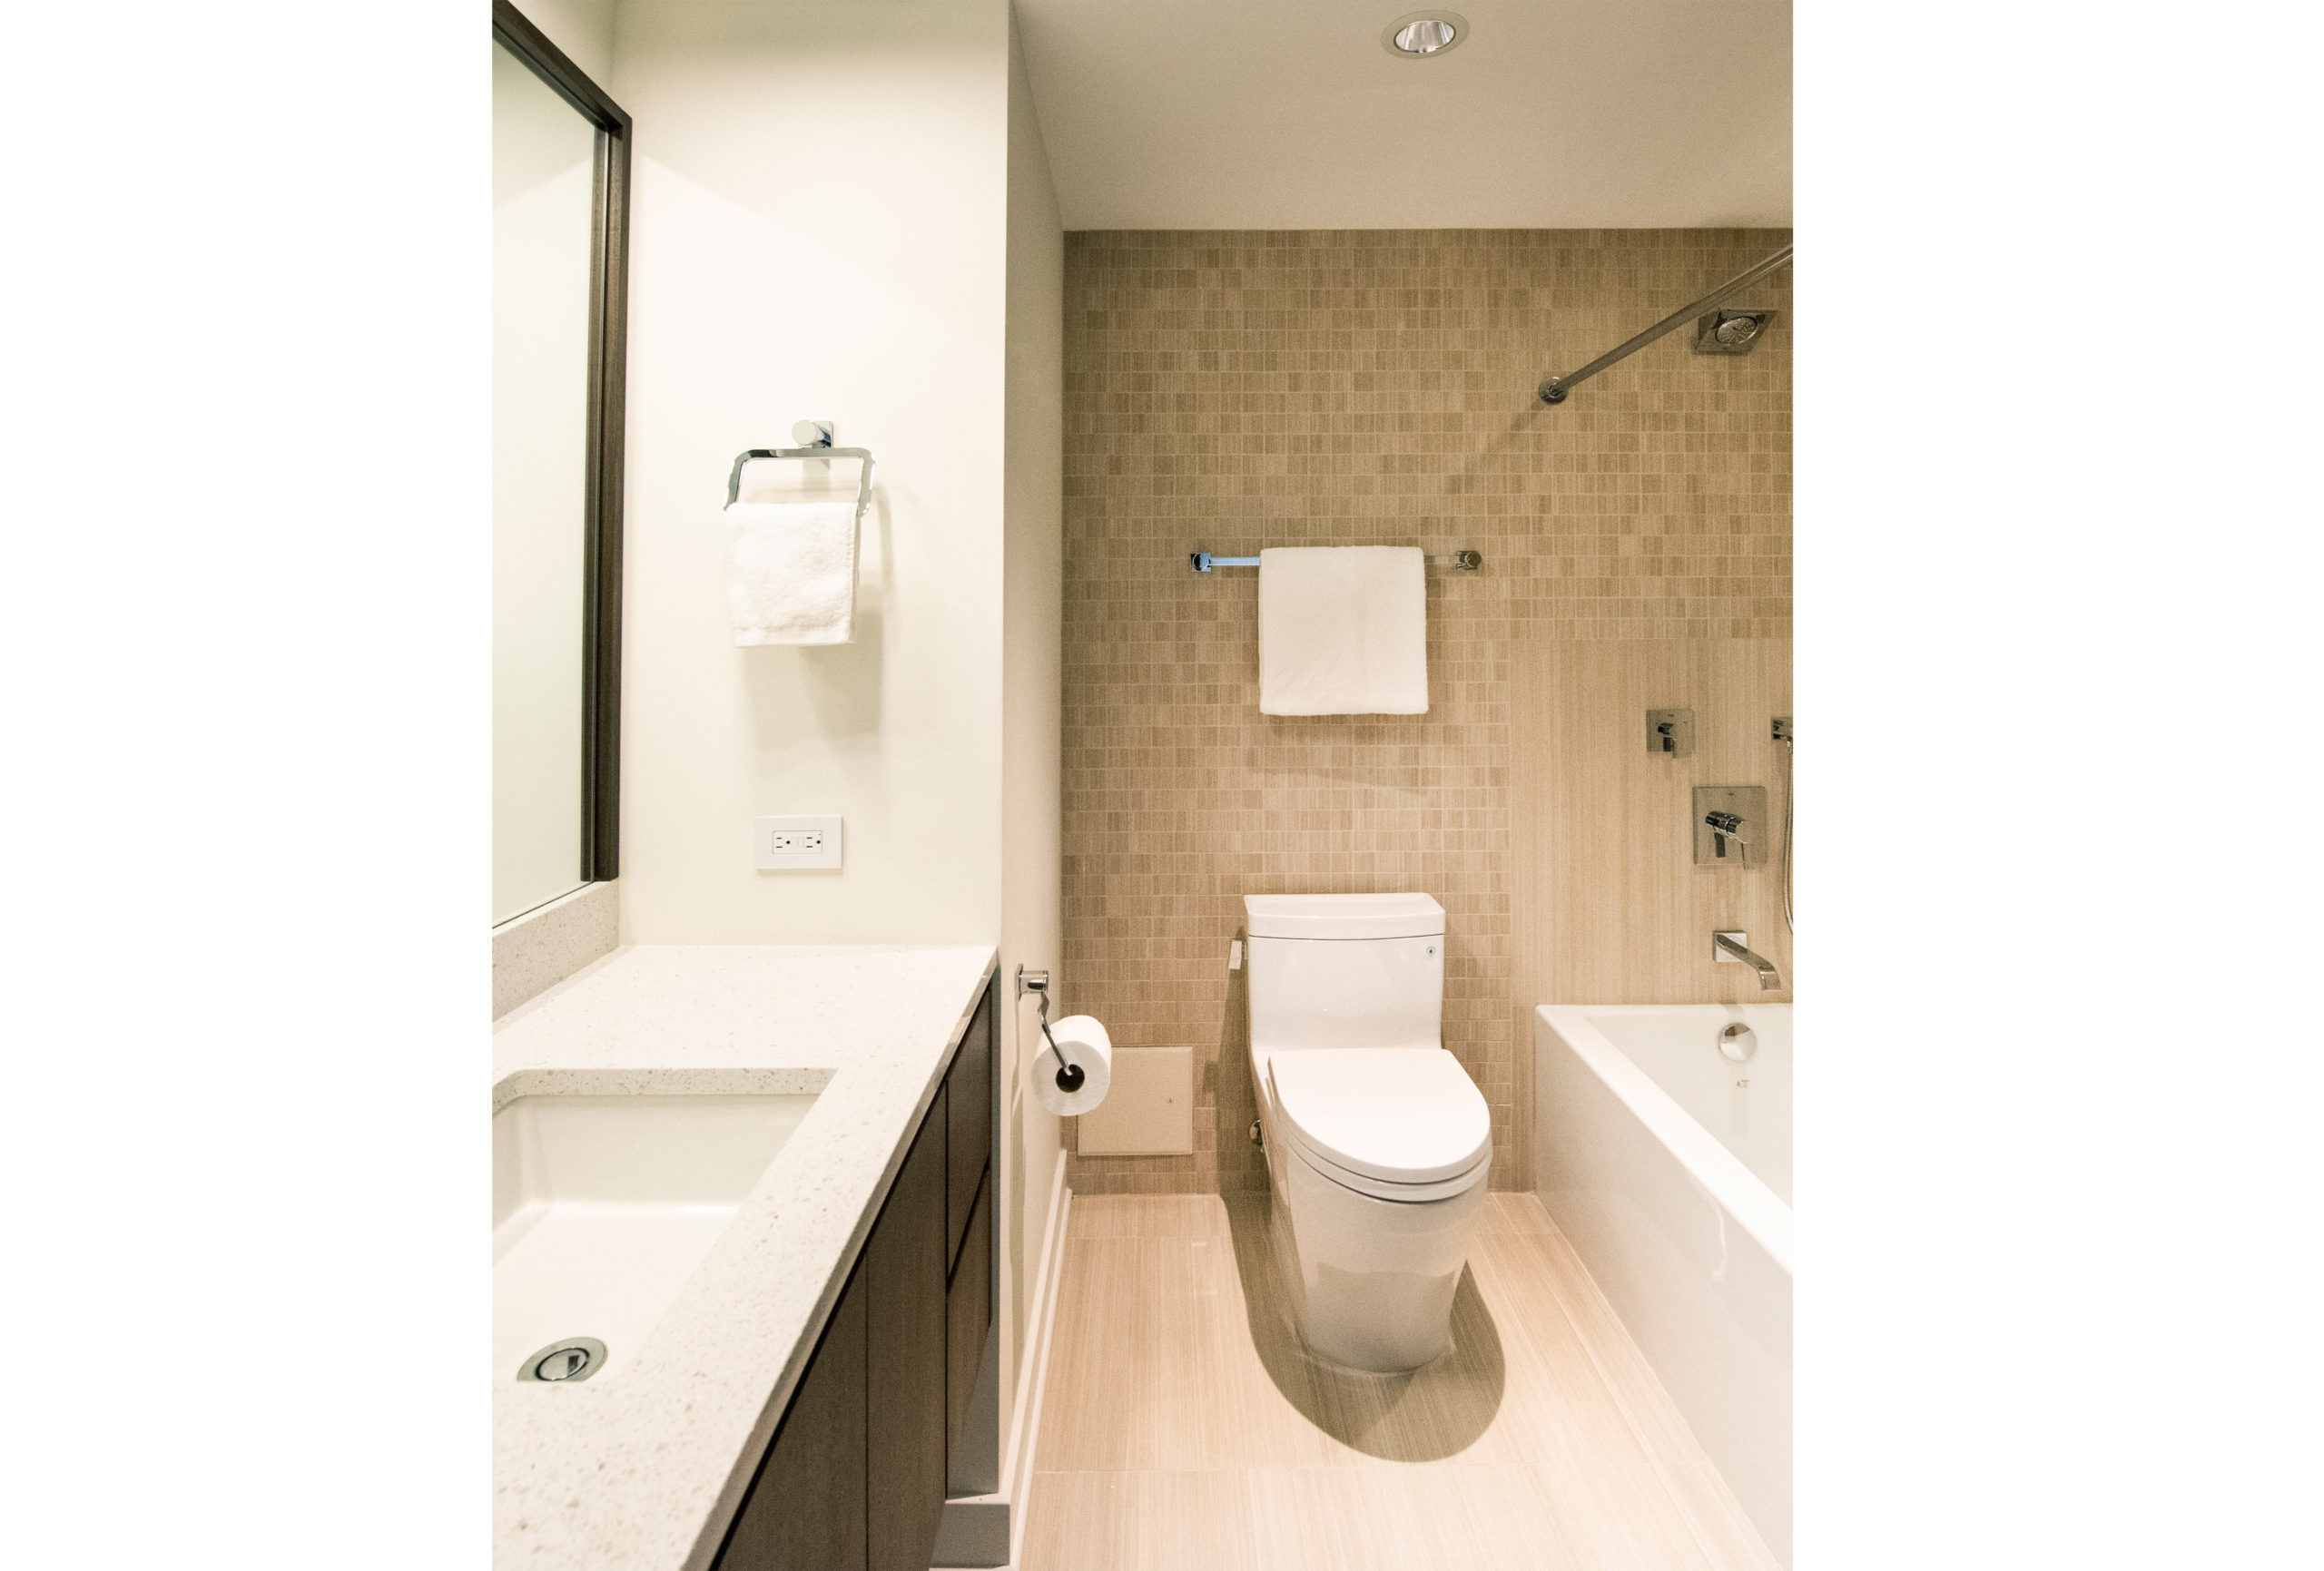 Bathroom with toilet, sink & mirror, shower, tan tile walls